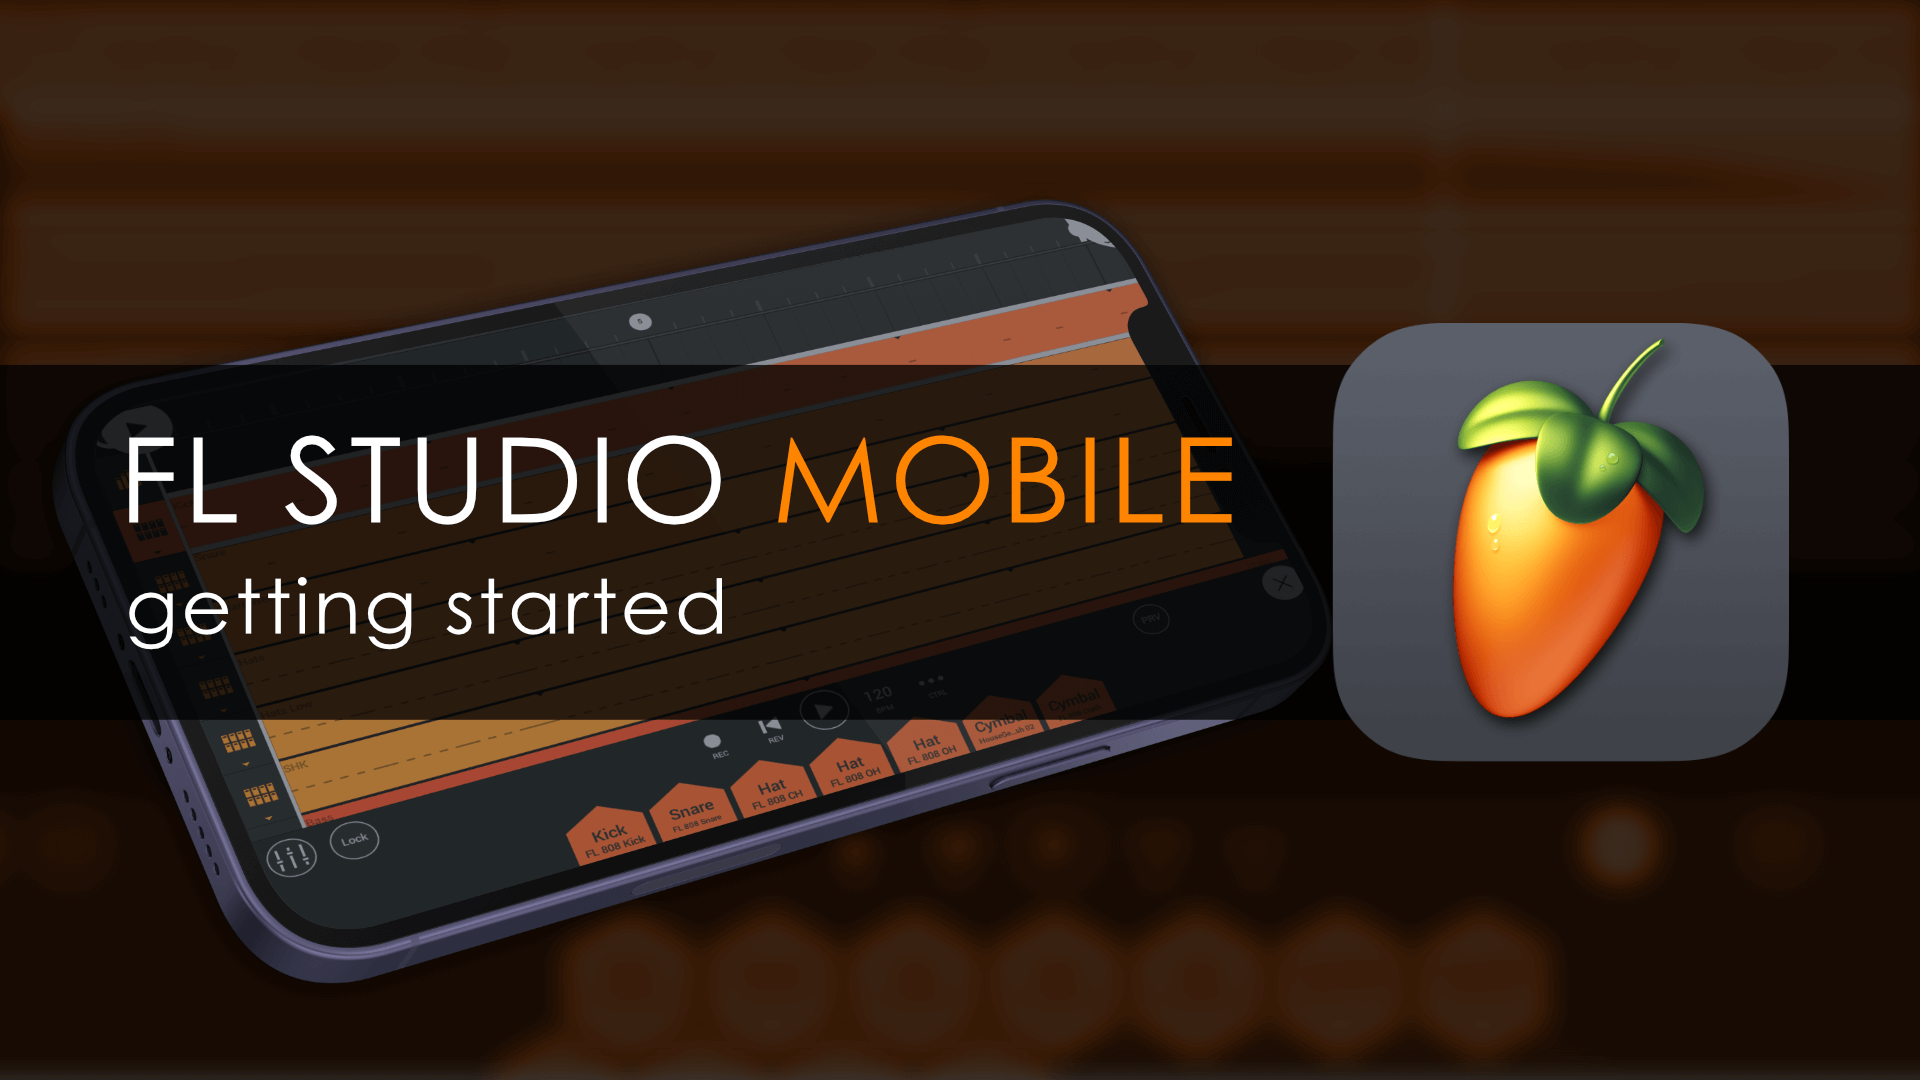 fl studio 12 mobile apk free download full version